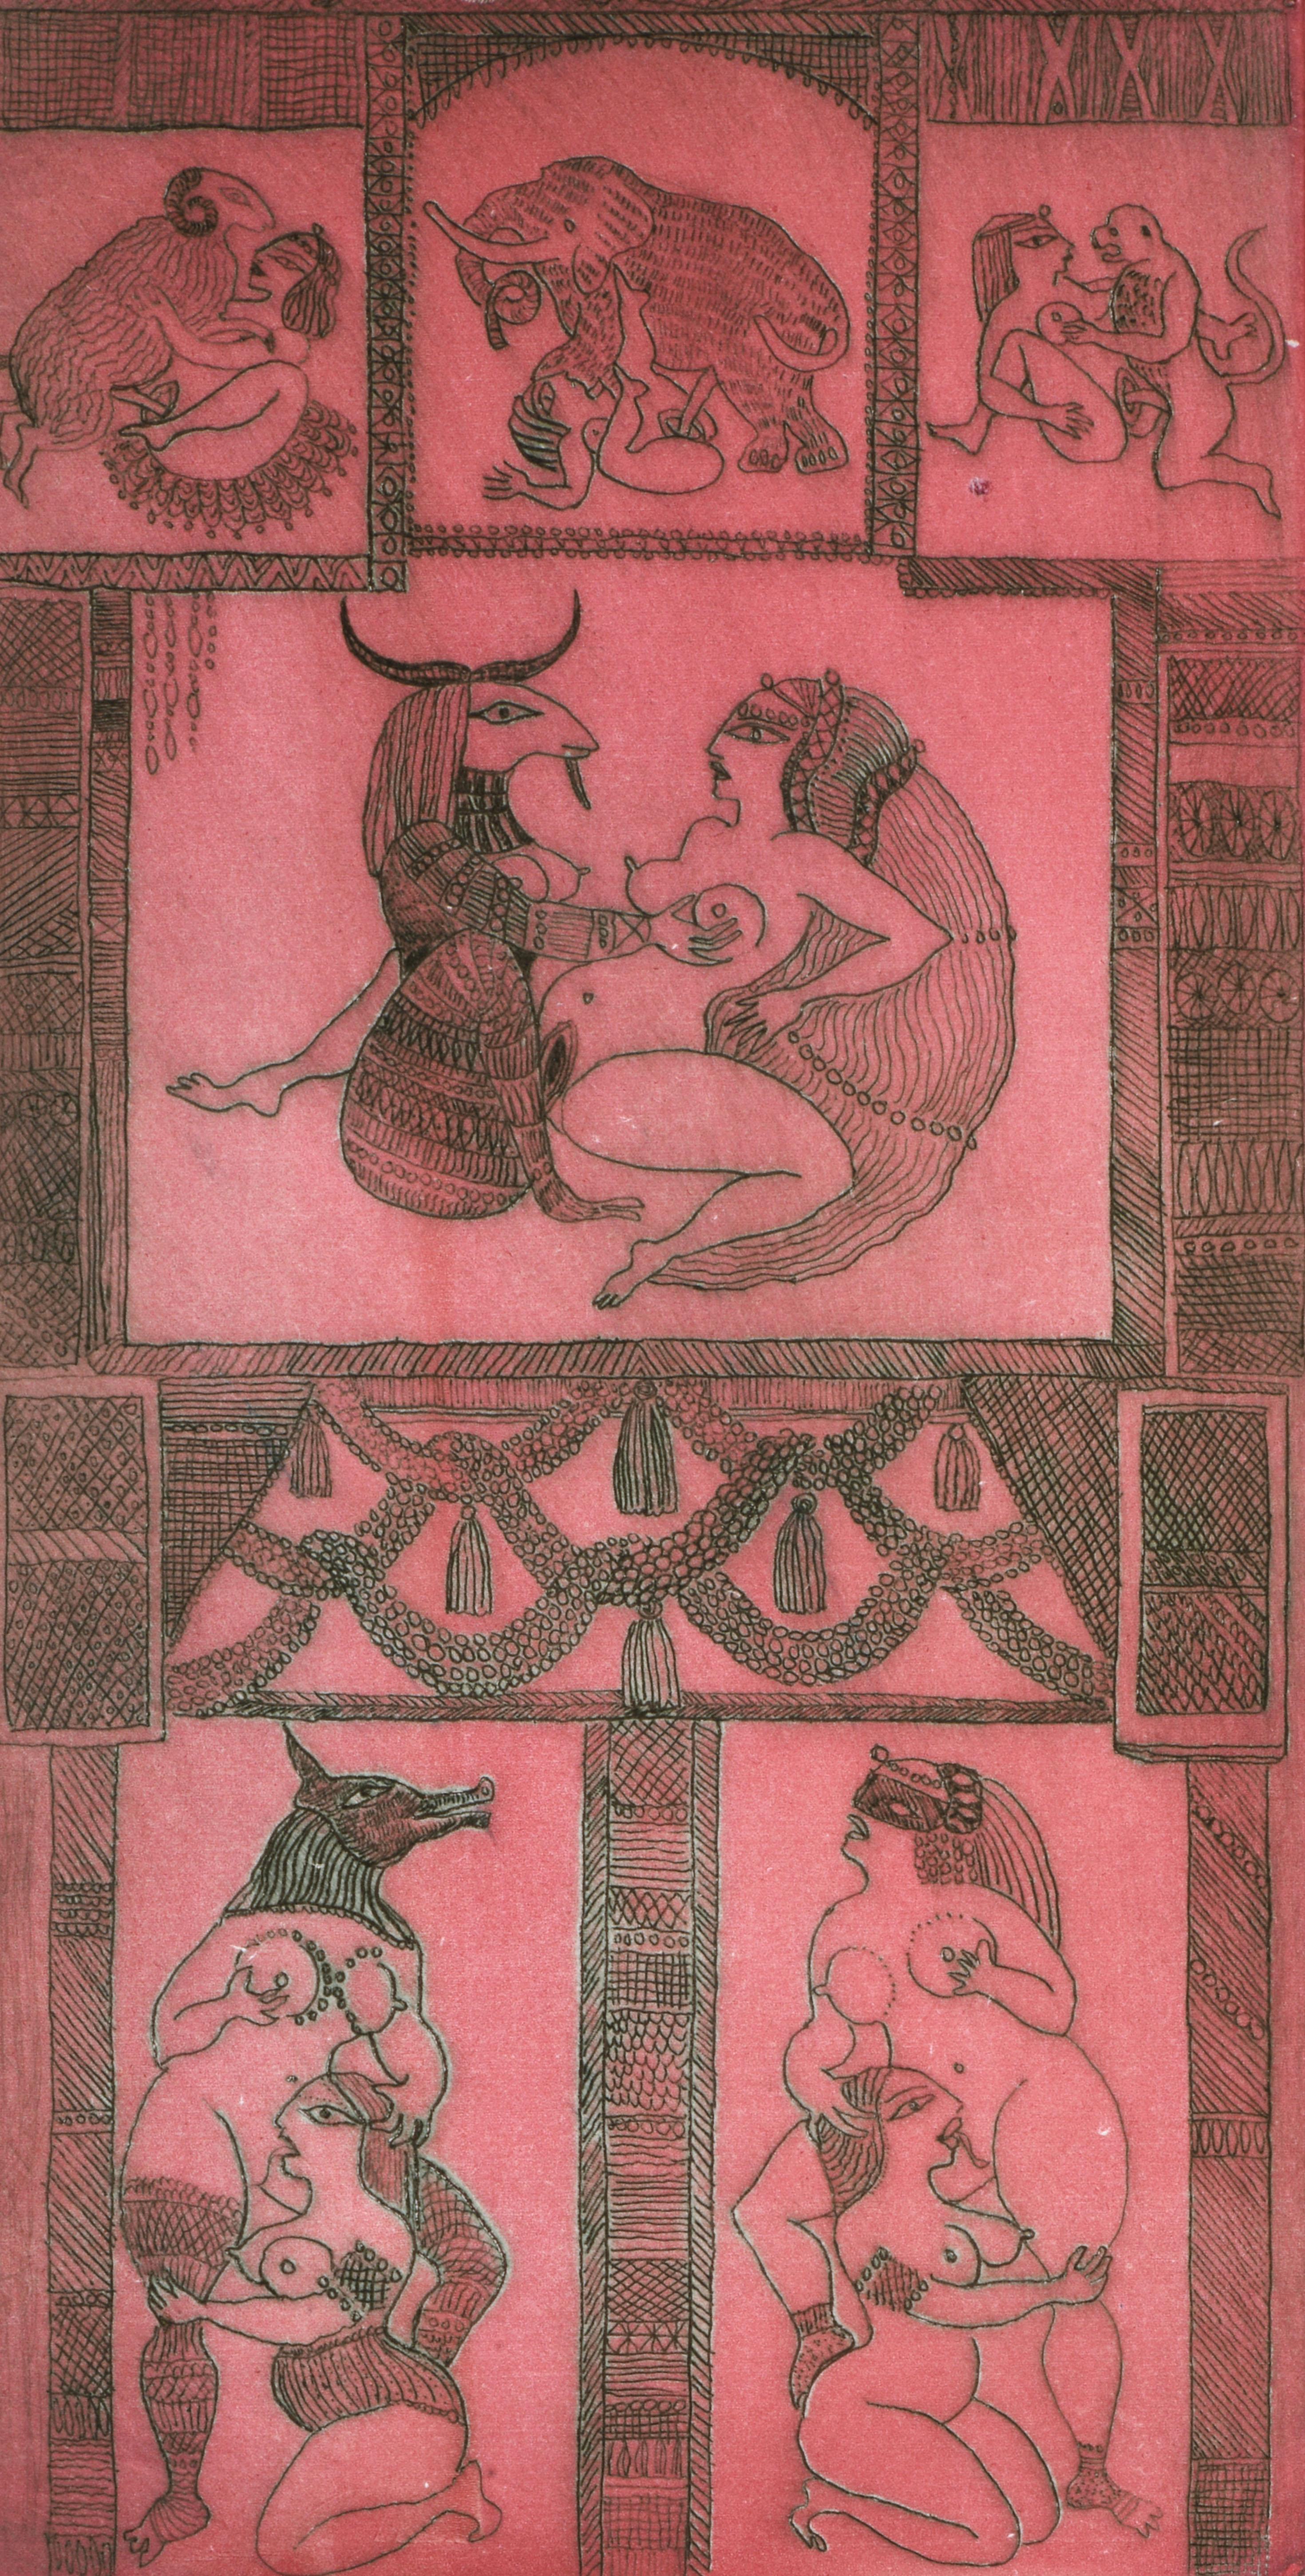 Noche Crist Animal Print - Women Loving Woomen